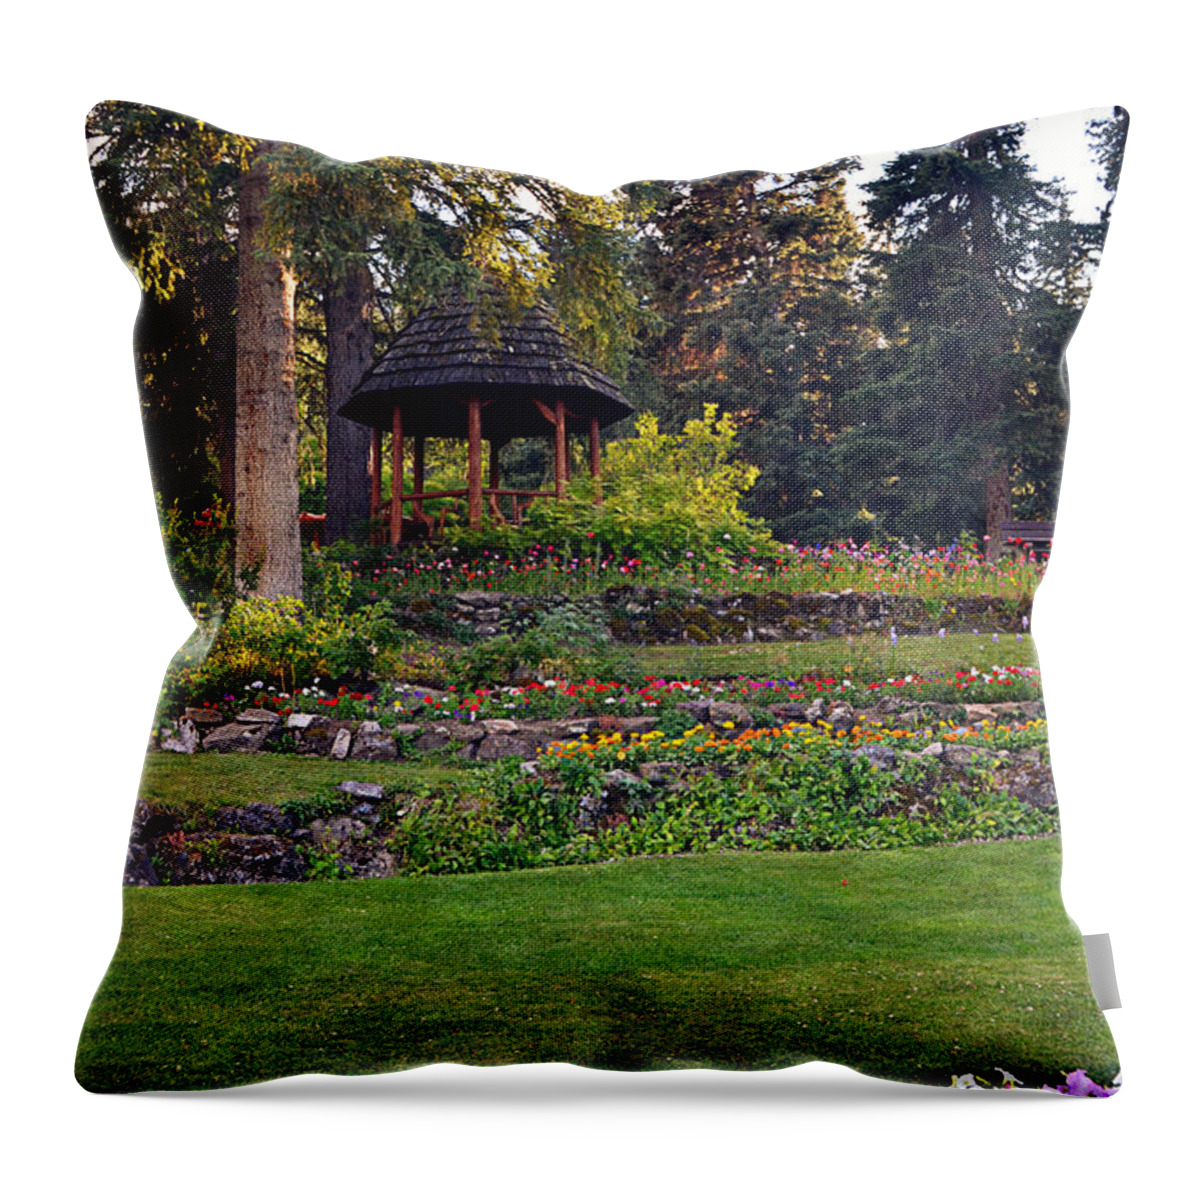 Alberta Throw Pillow featuring the photograph The Garden Gazebo by Maria Angelica Maira